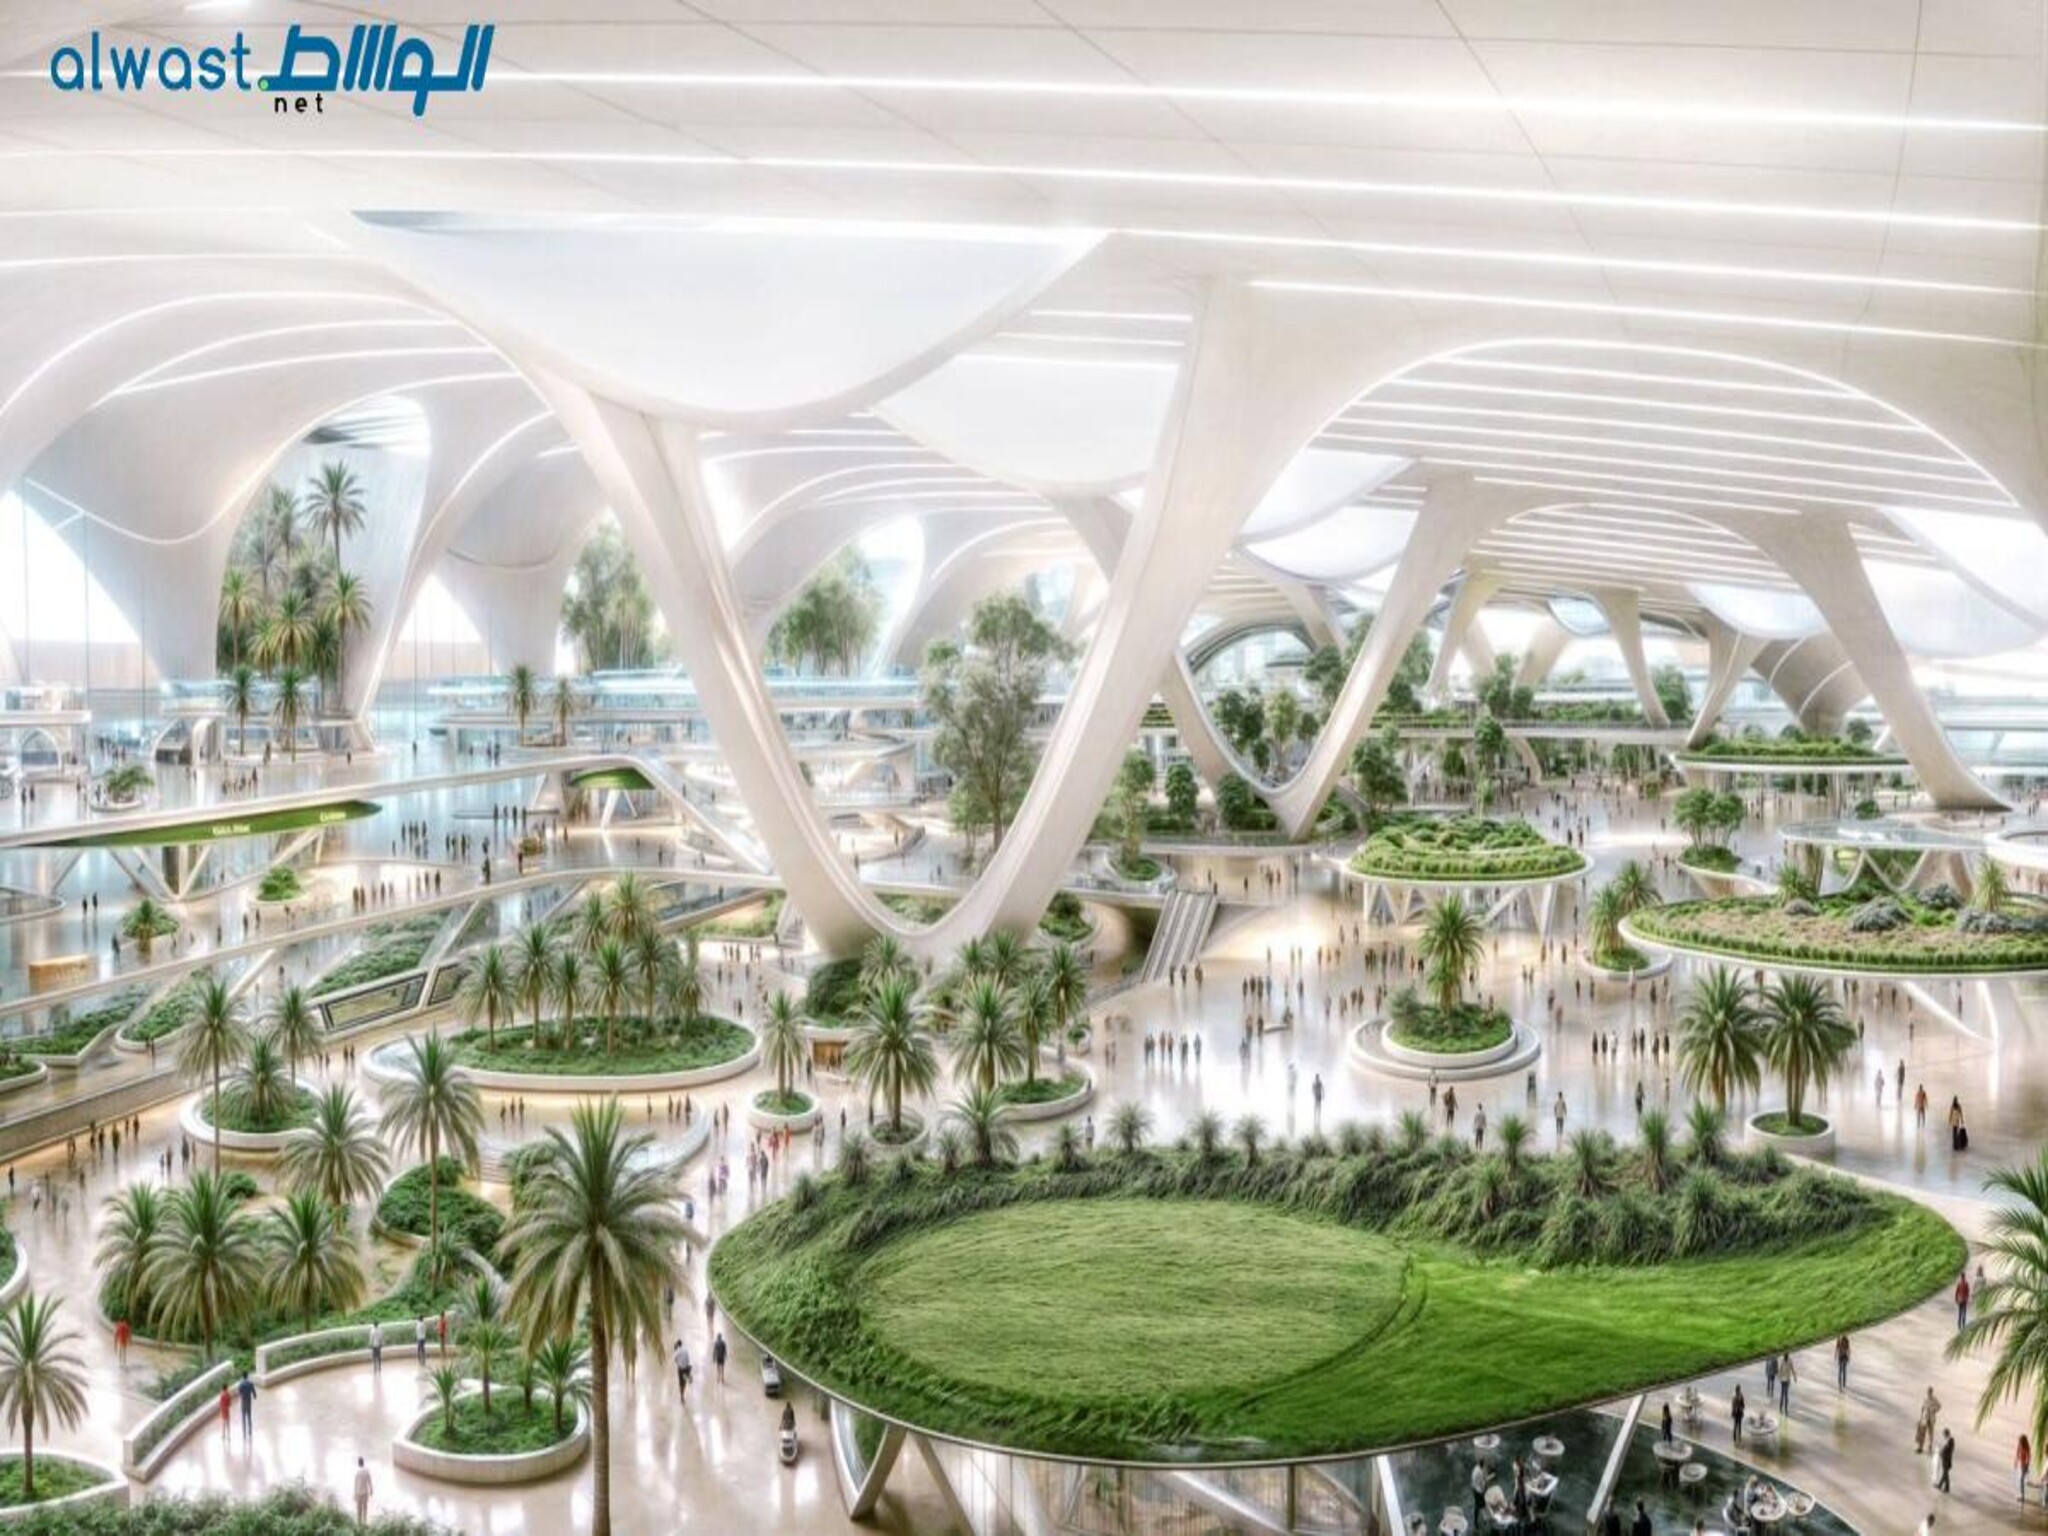 Dubai ruler approves New Terminal Design for Al Maktoum Airport